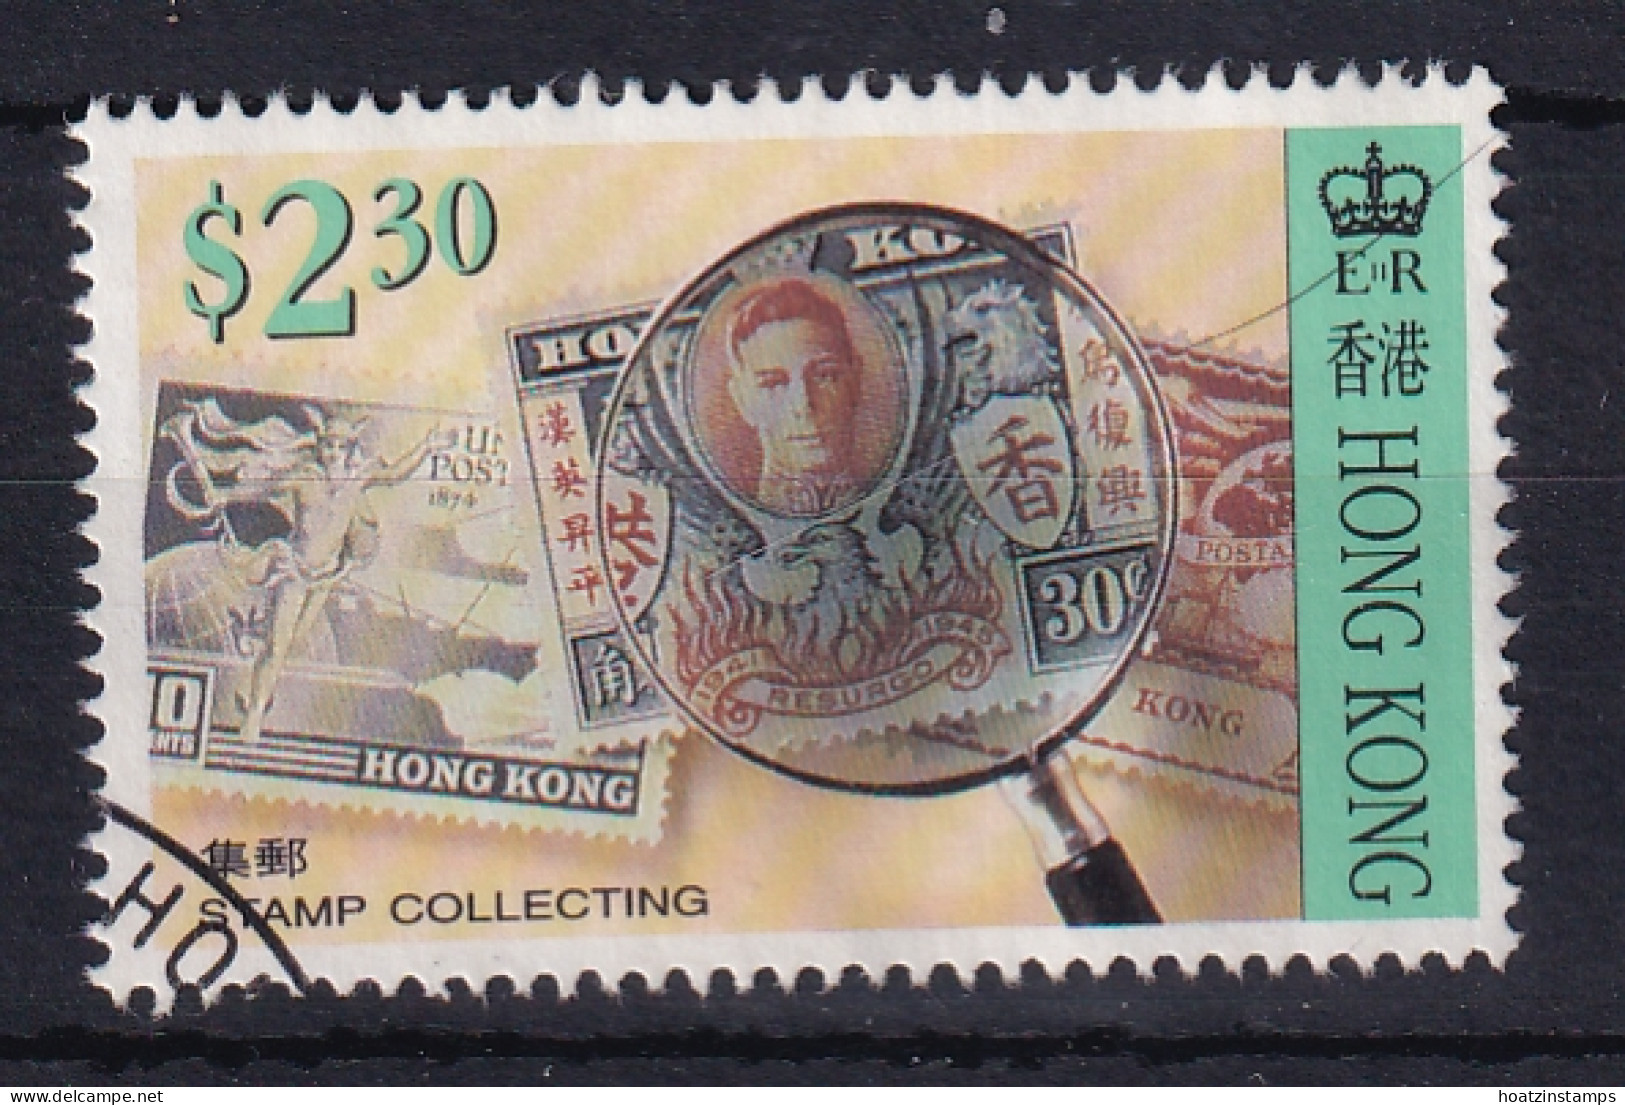 Hong Kong: 1992   Stamp Collecting   SG720    $2.30   Used  - Usati